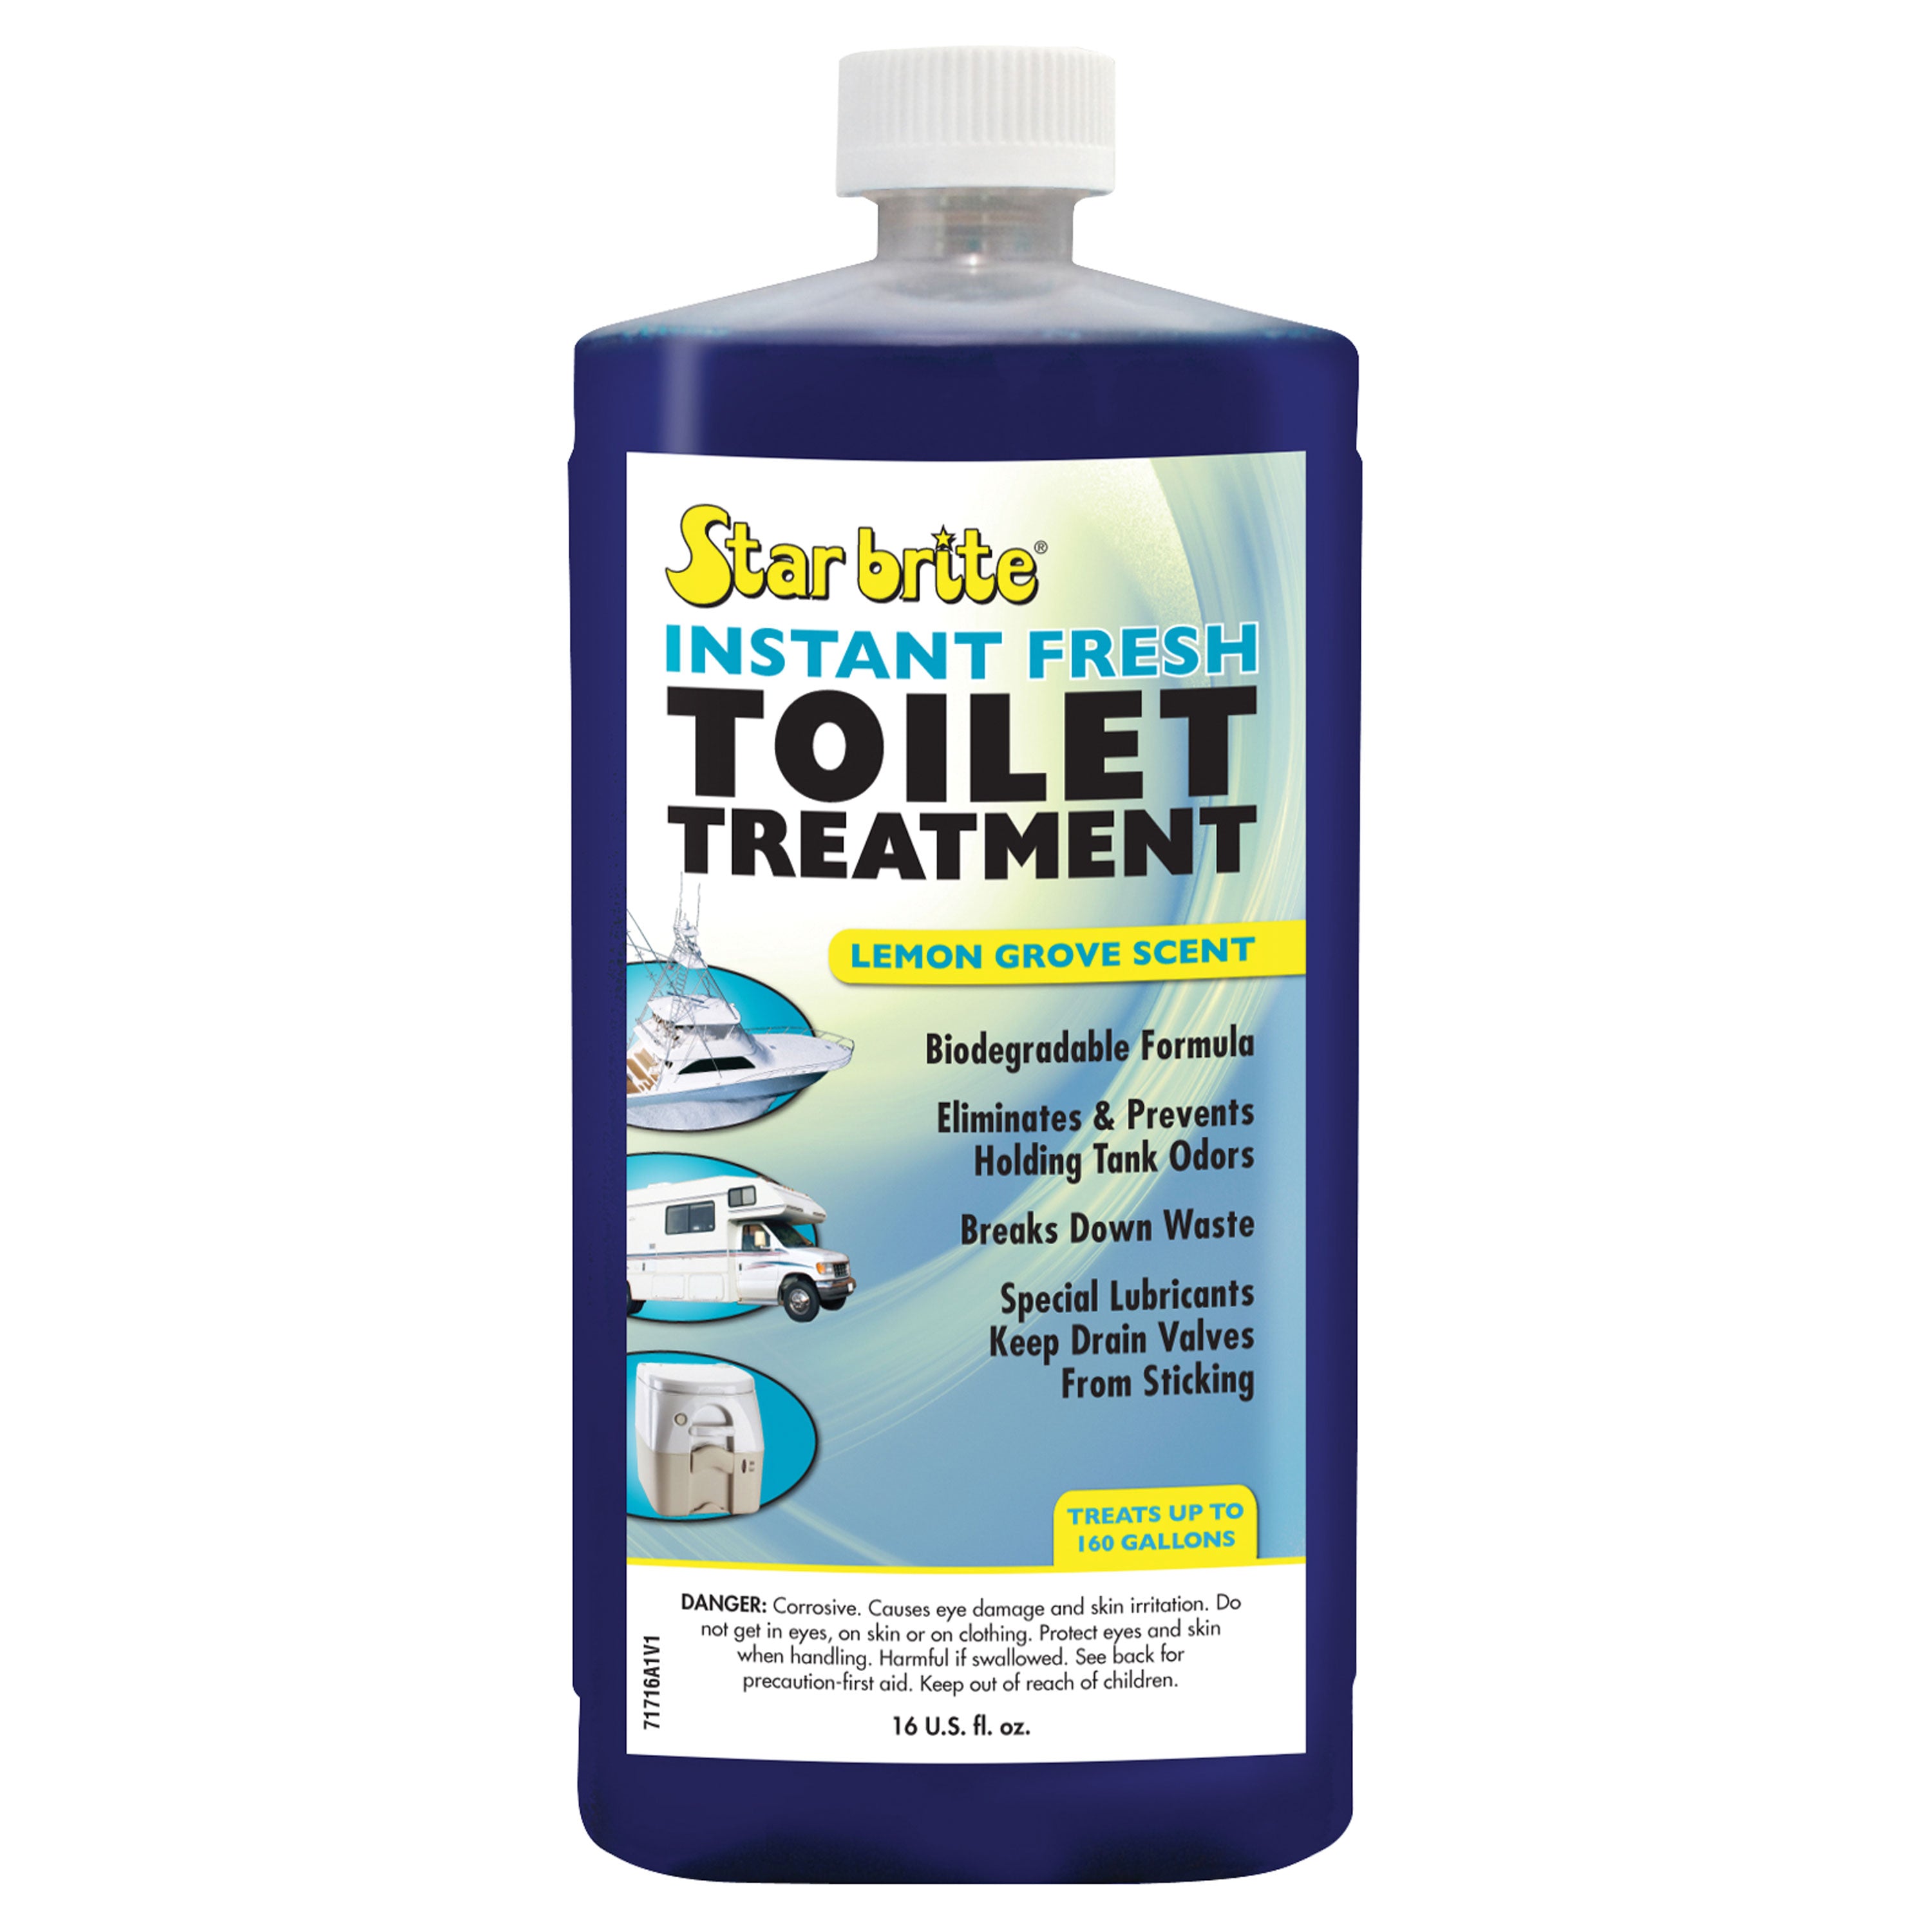 Star brite 071716 Instant Fresh Toilet Treatment - Lemon Scent, 16 oz